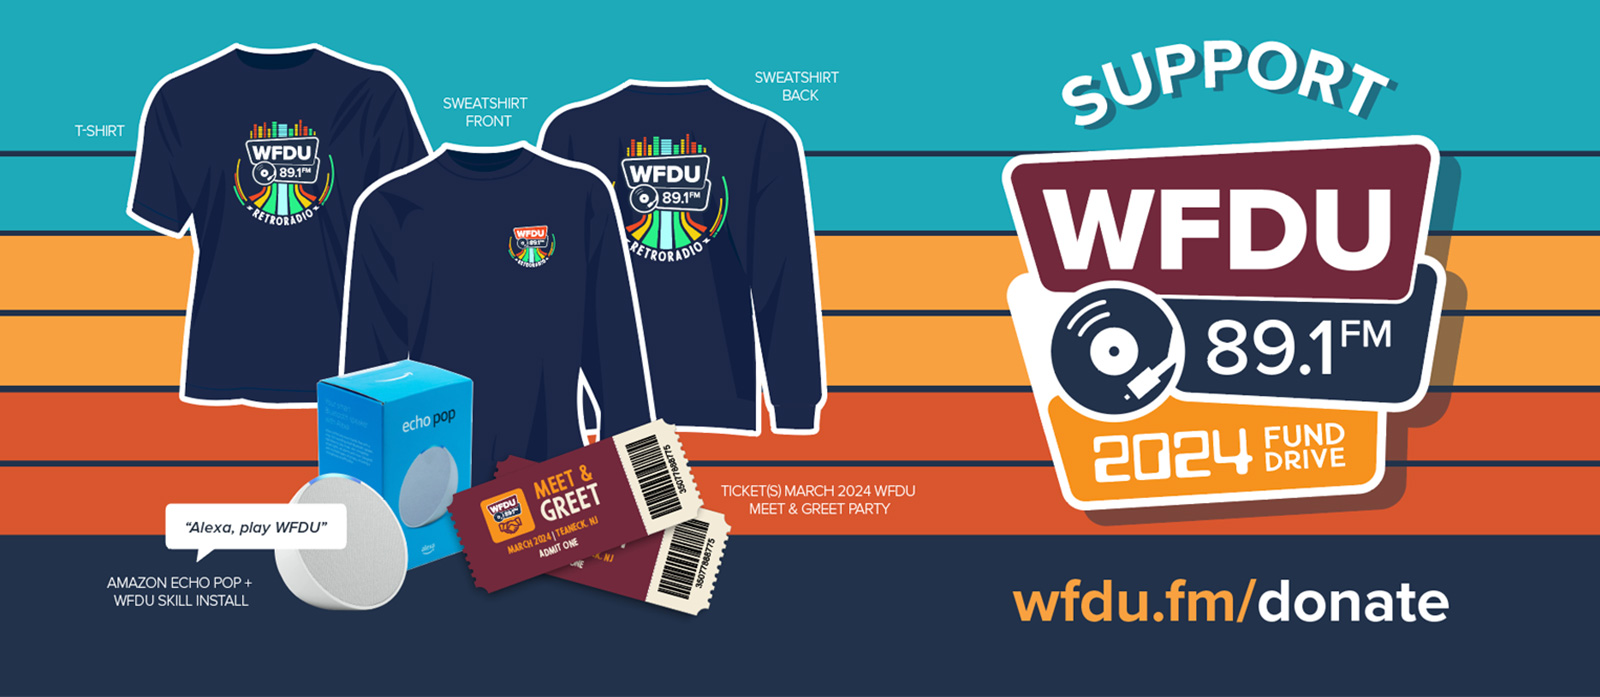 images_of_wfdu-fund-drive-premiums_sweatshirt-t-shirt-echo-event